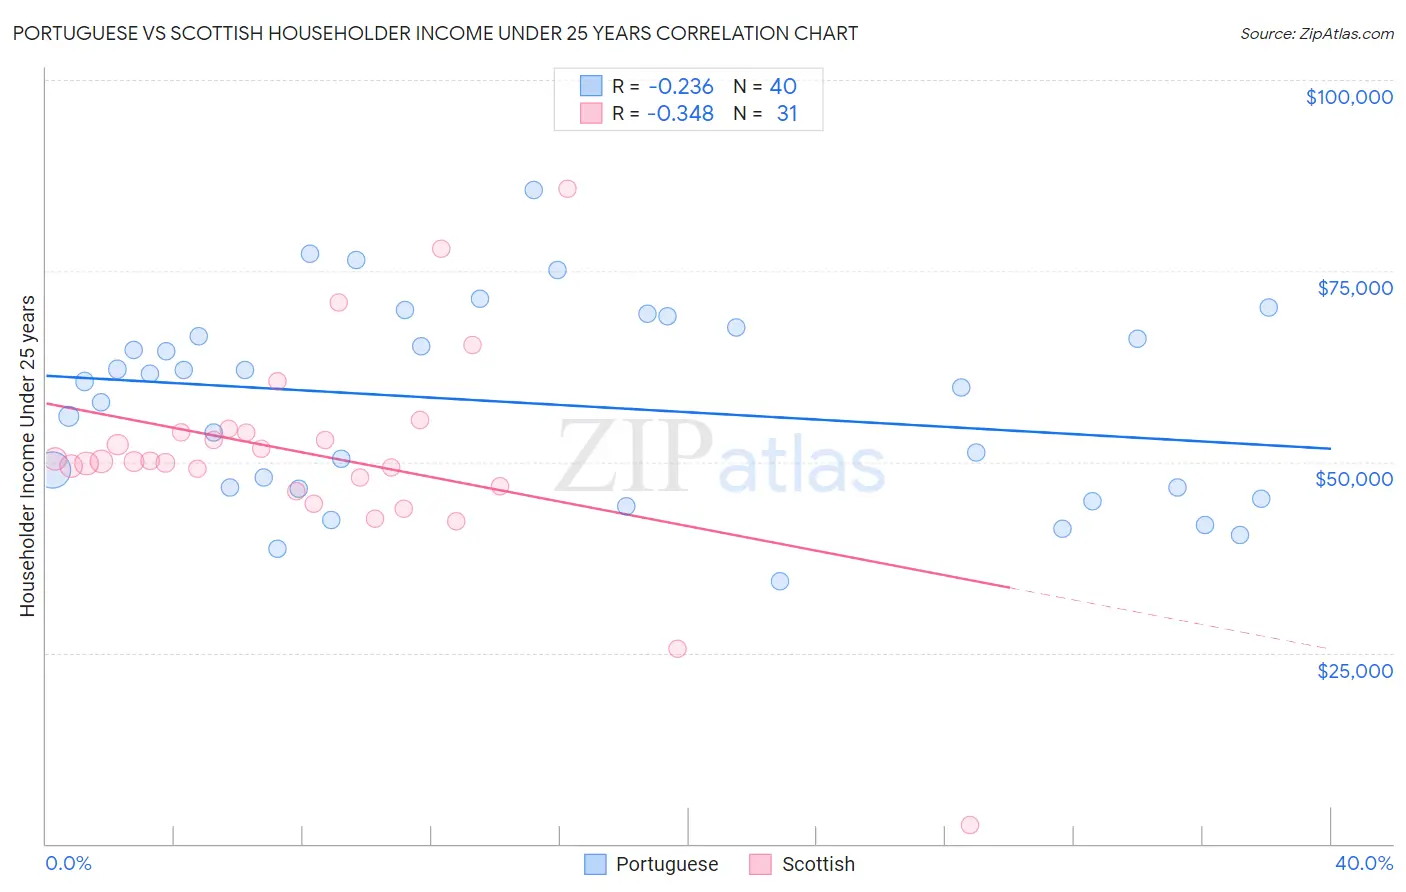 Portuguese vs Scottish Householder Income Under 25 years